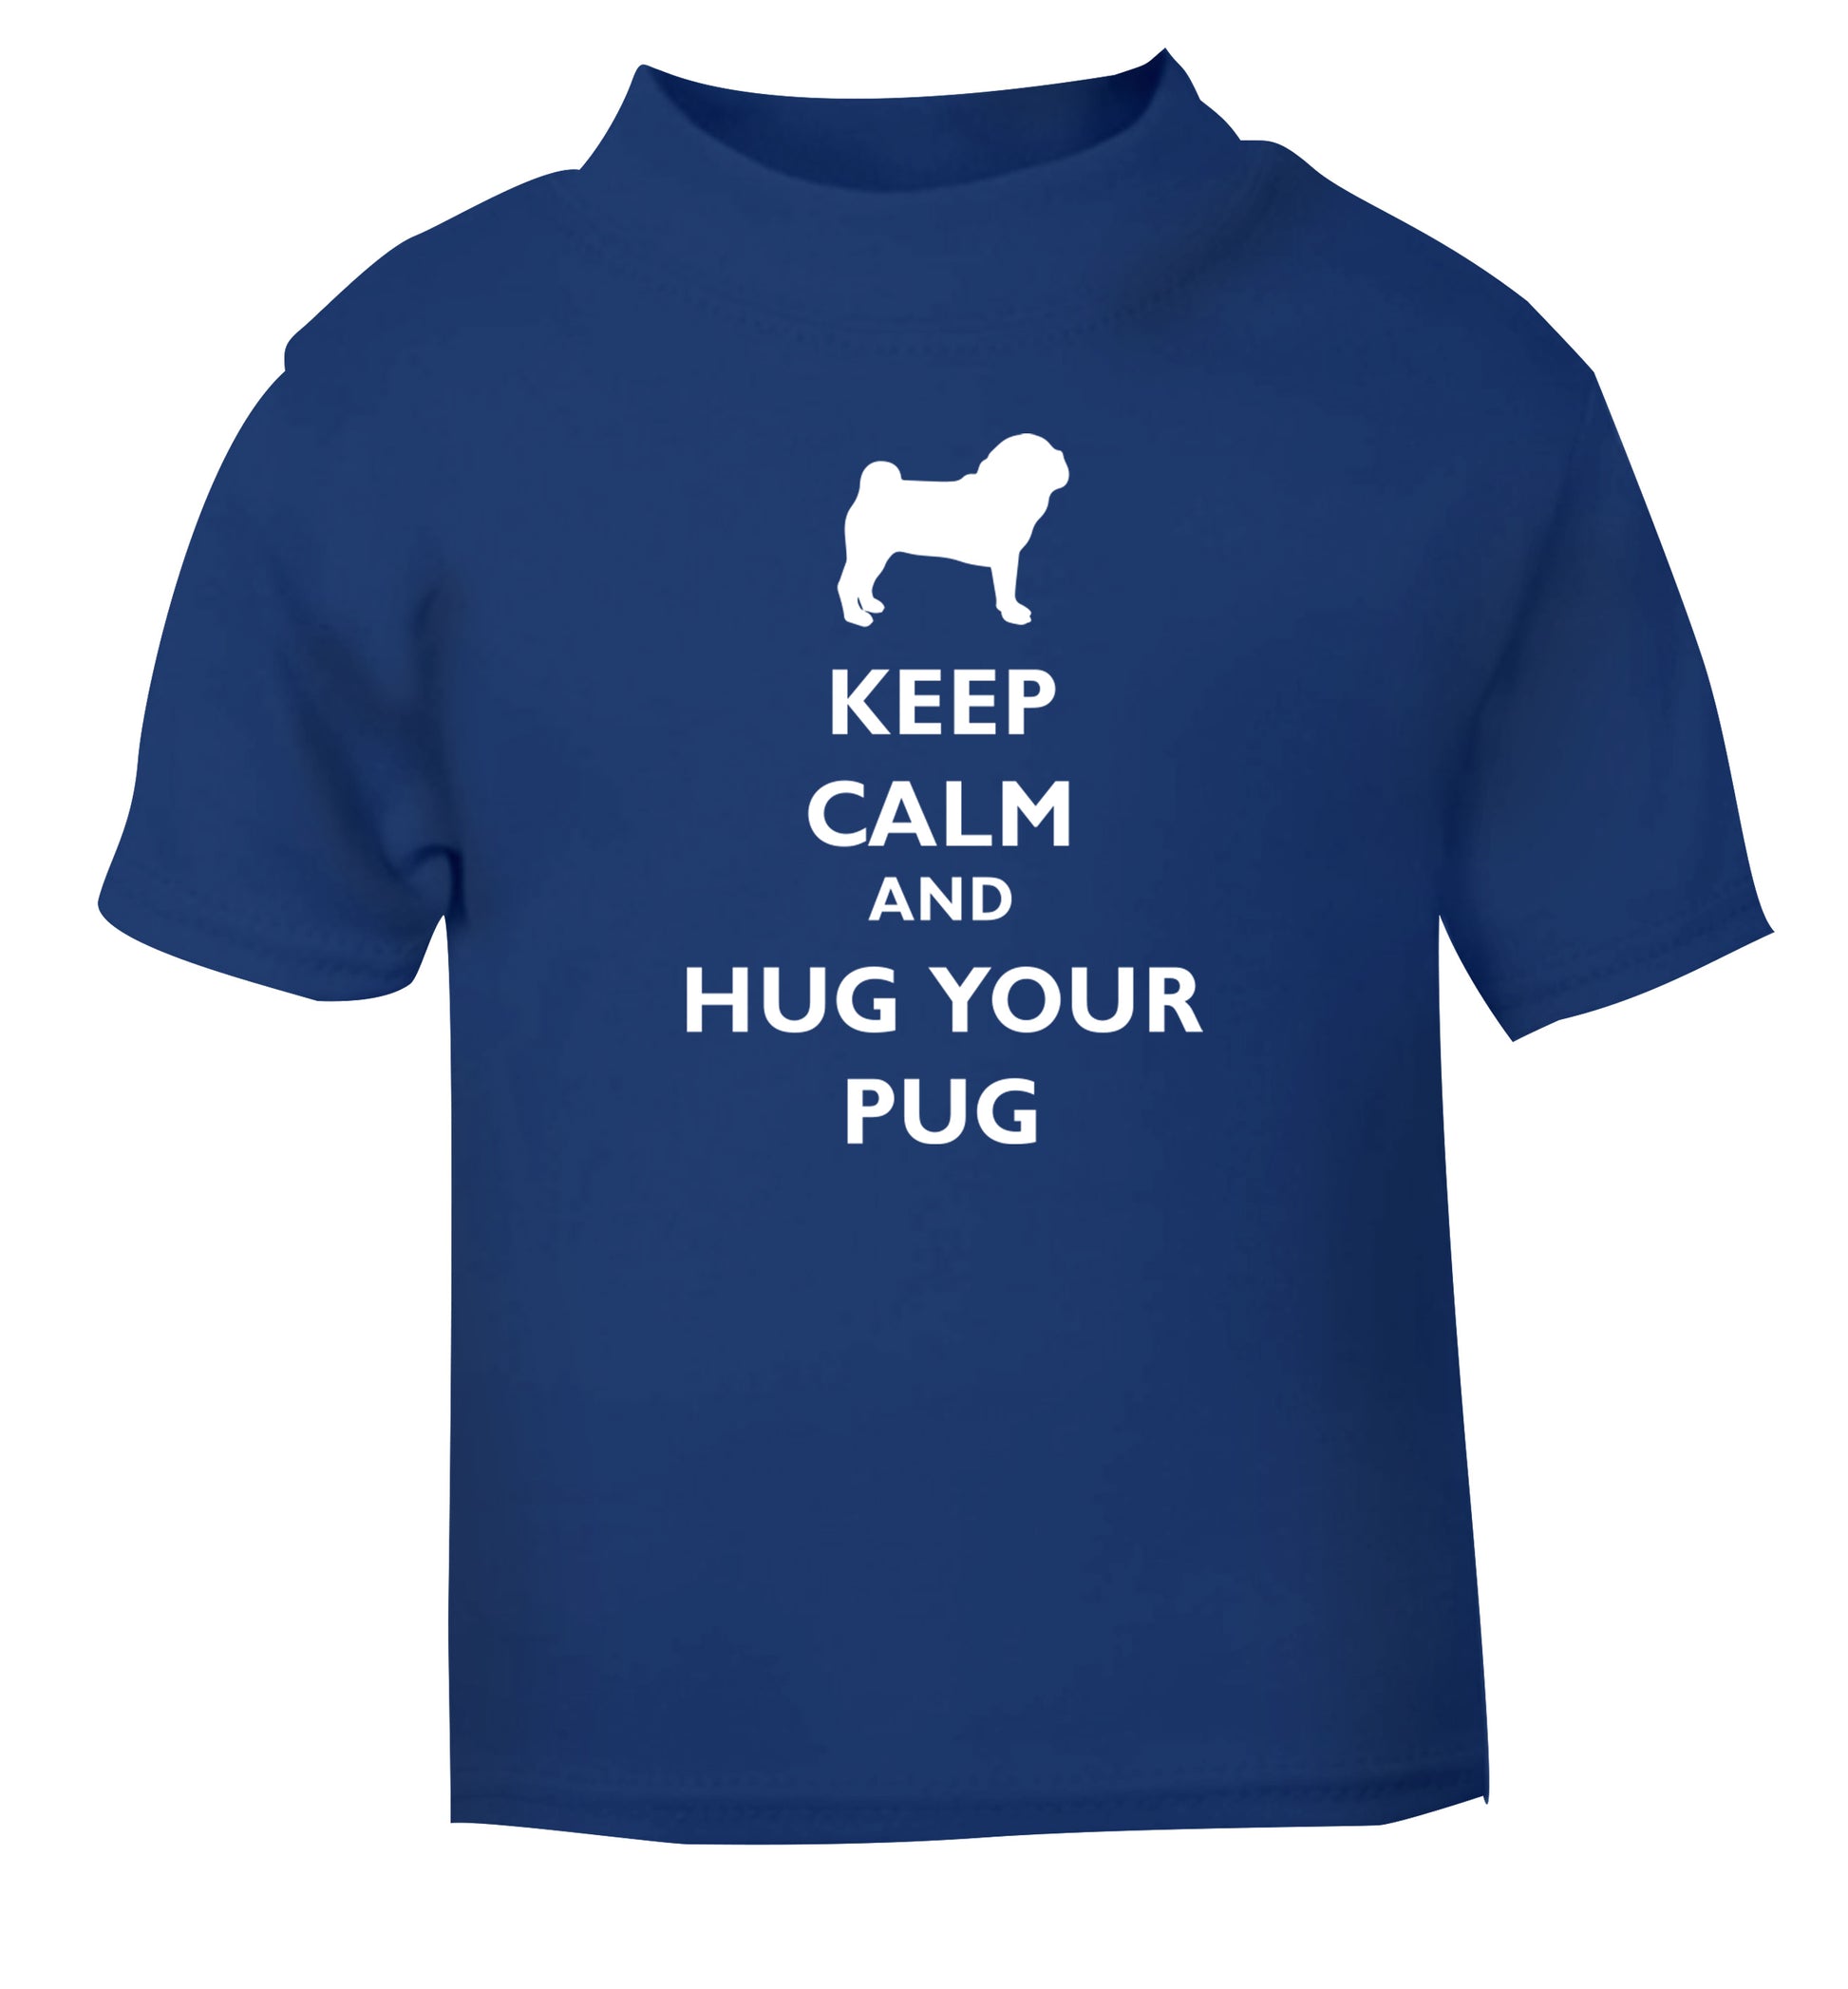 Keep calm and hug your pug blue Baby Toddler Tshirt 2 Years